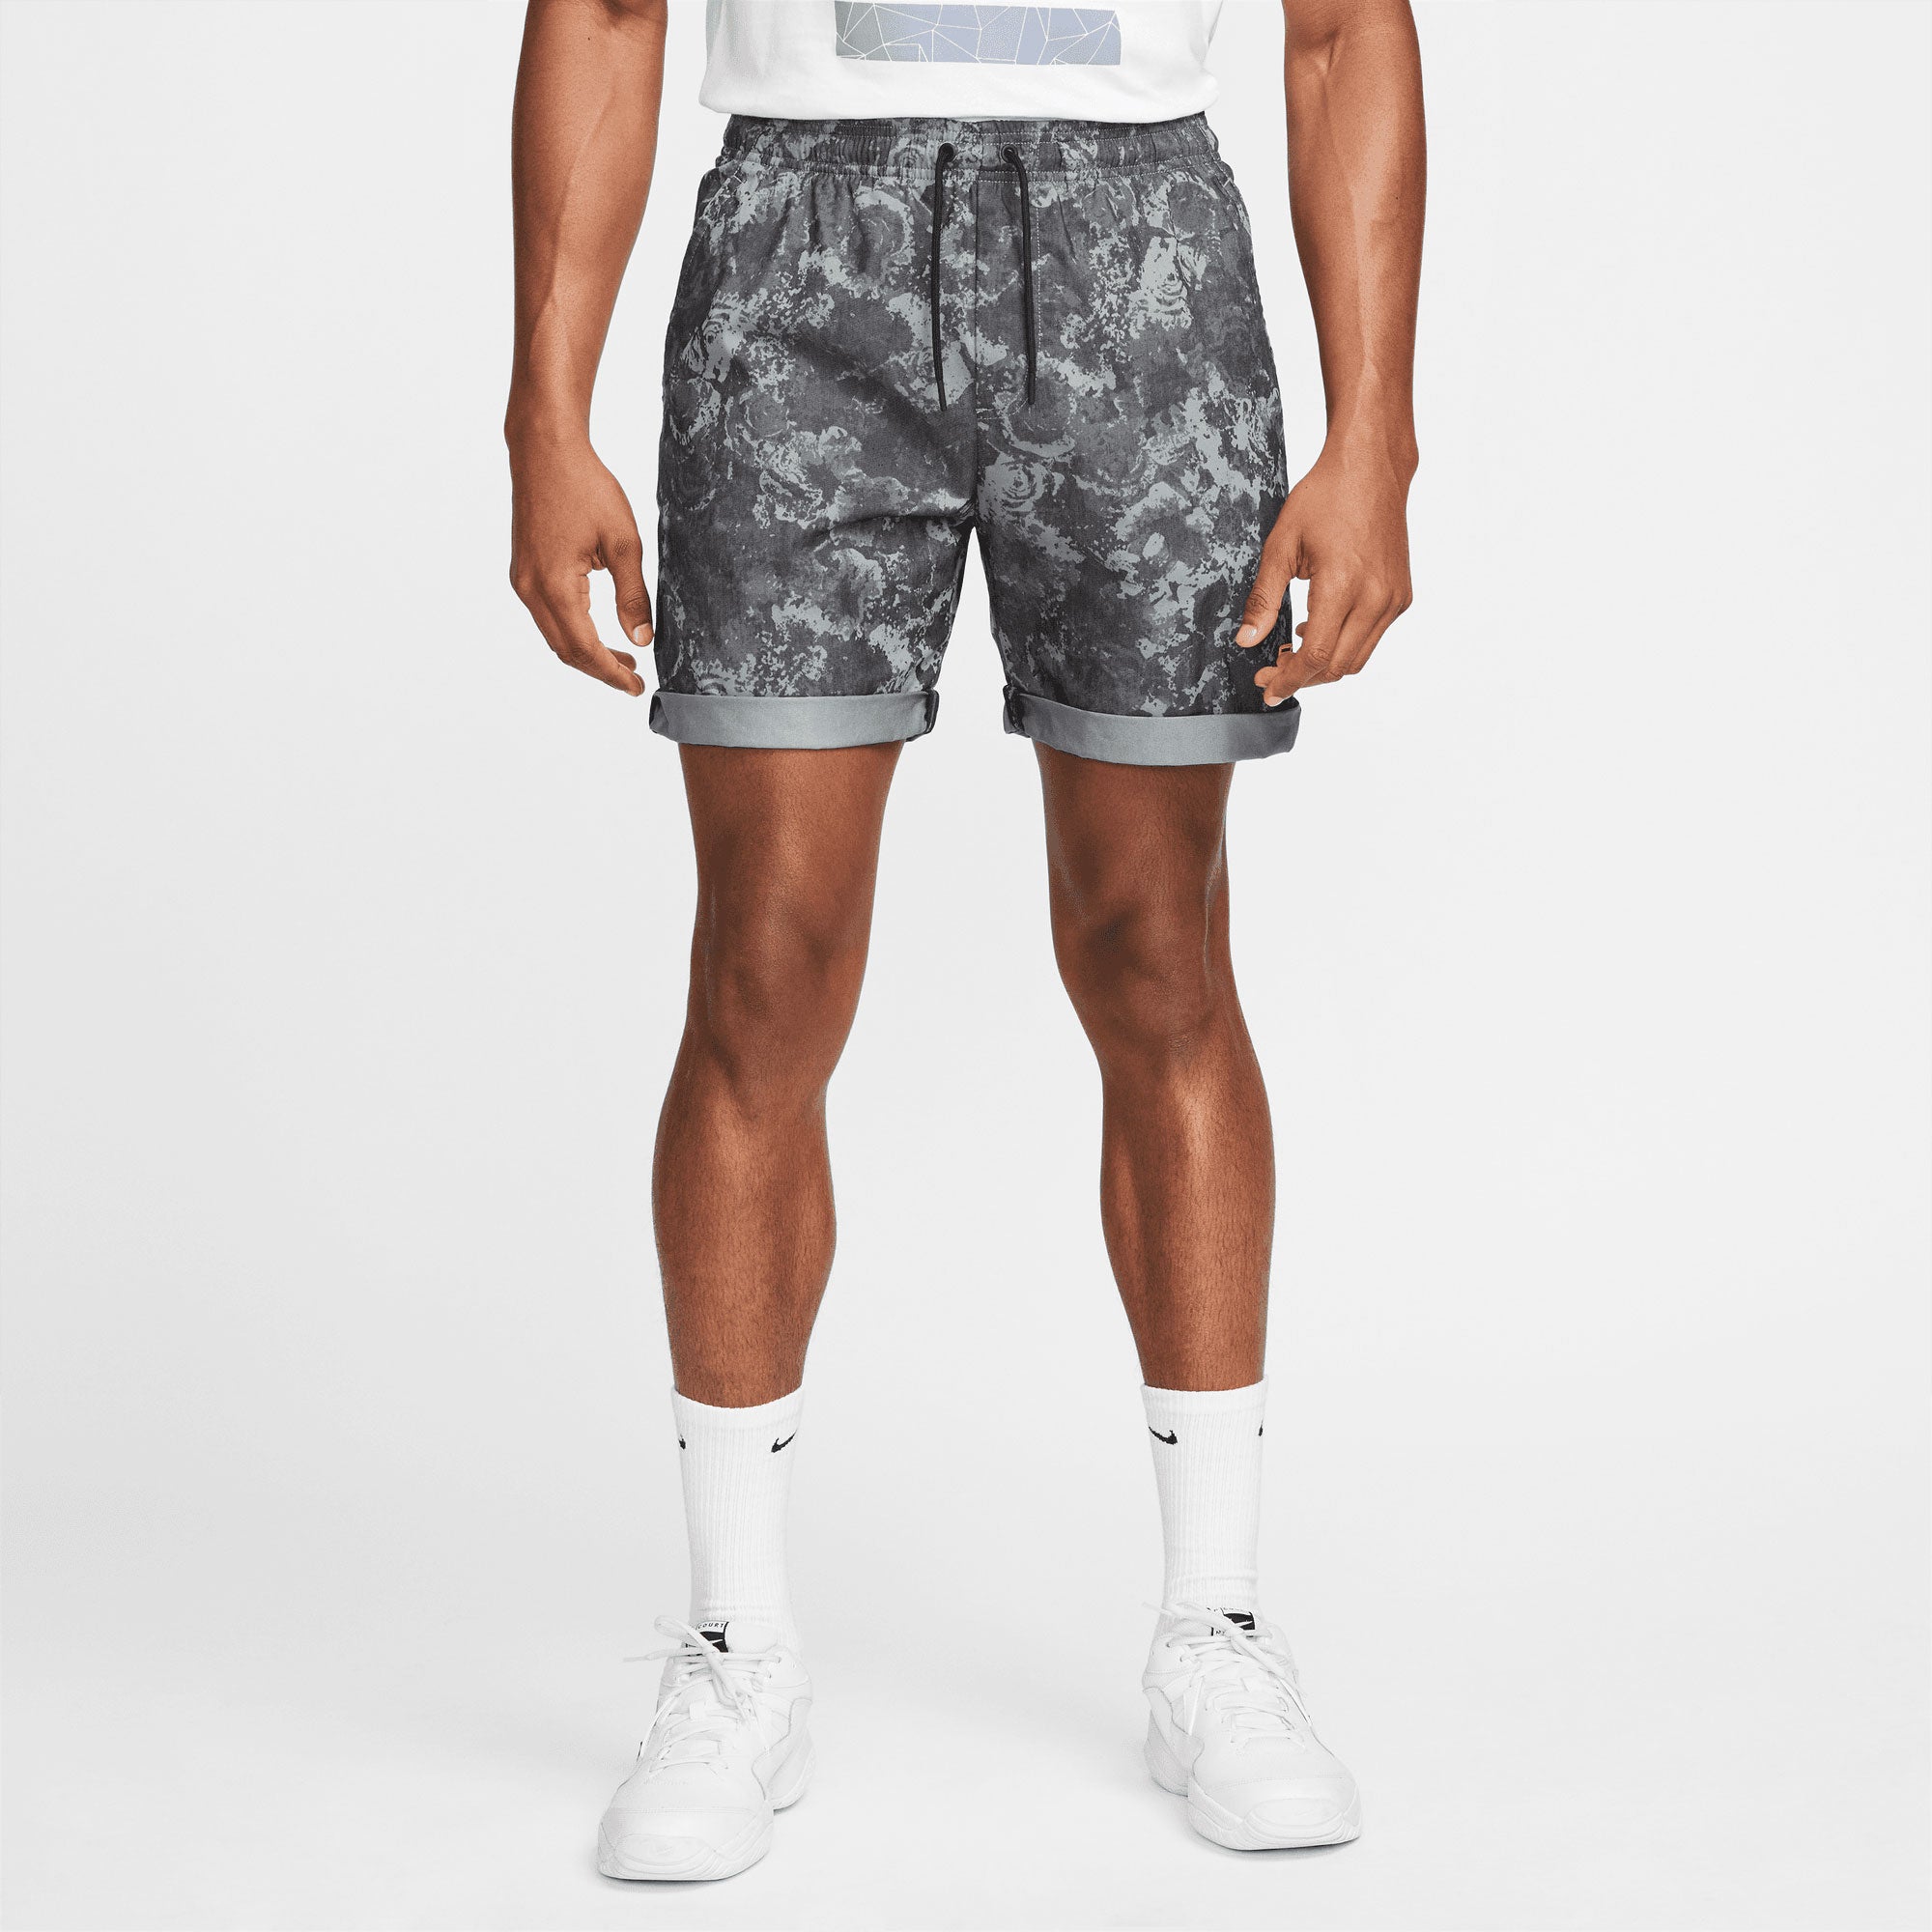 NikeCourt Dri-FIT Heritage London Men's Printed Tennis Shorts Black (1)